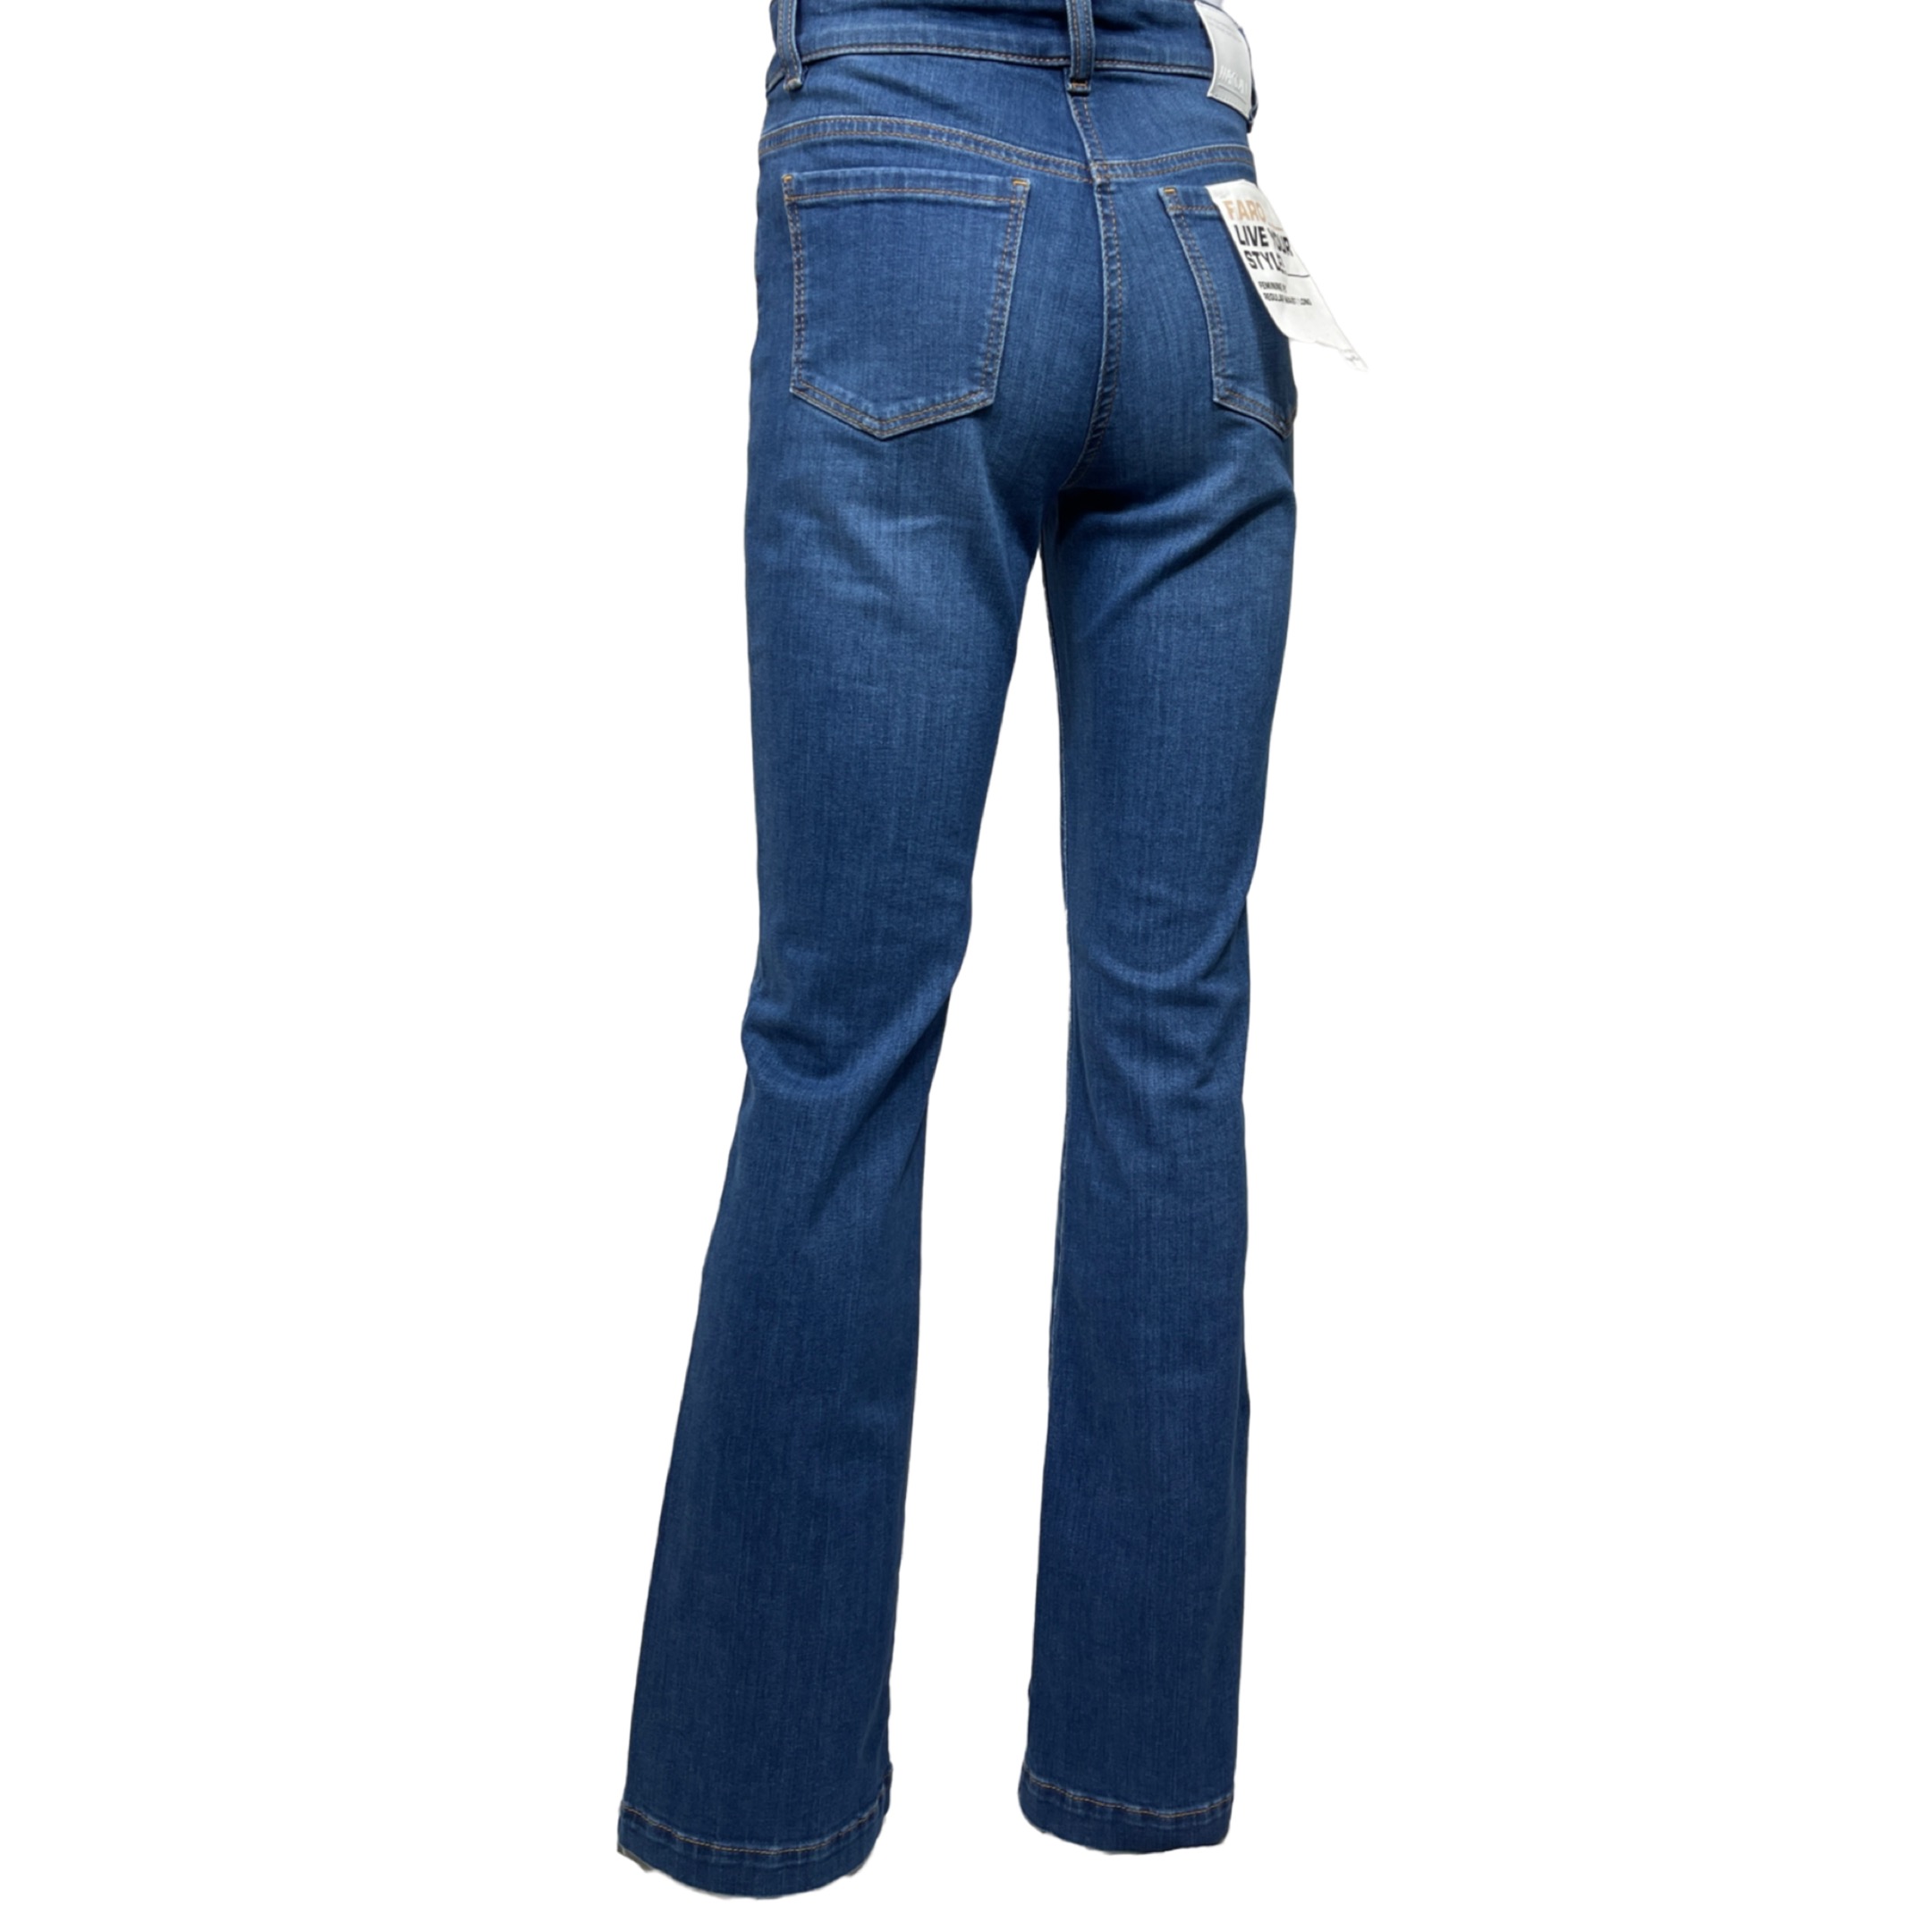 MARC CAIN UP 82.06 D71 Damen Jeans Bootcut Rethink Together Faro Feminine fit Blau 353